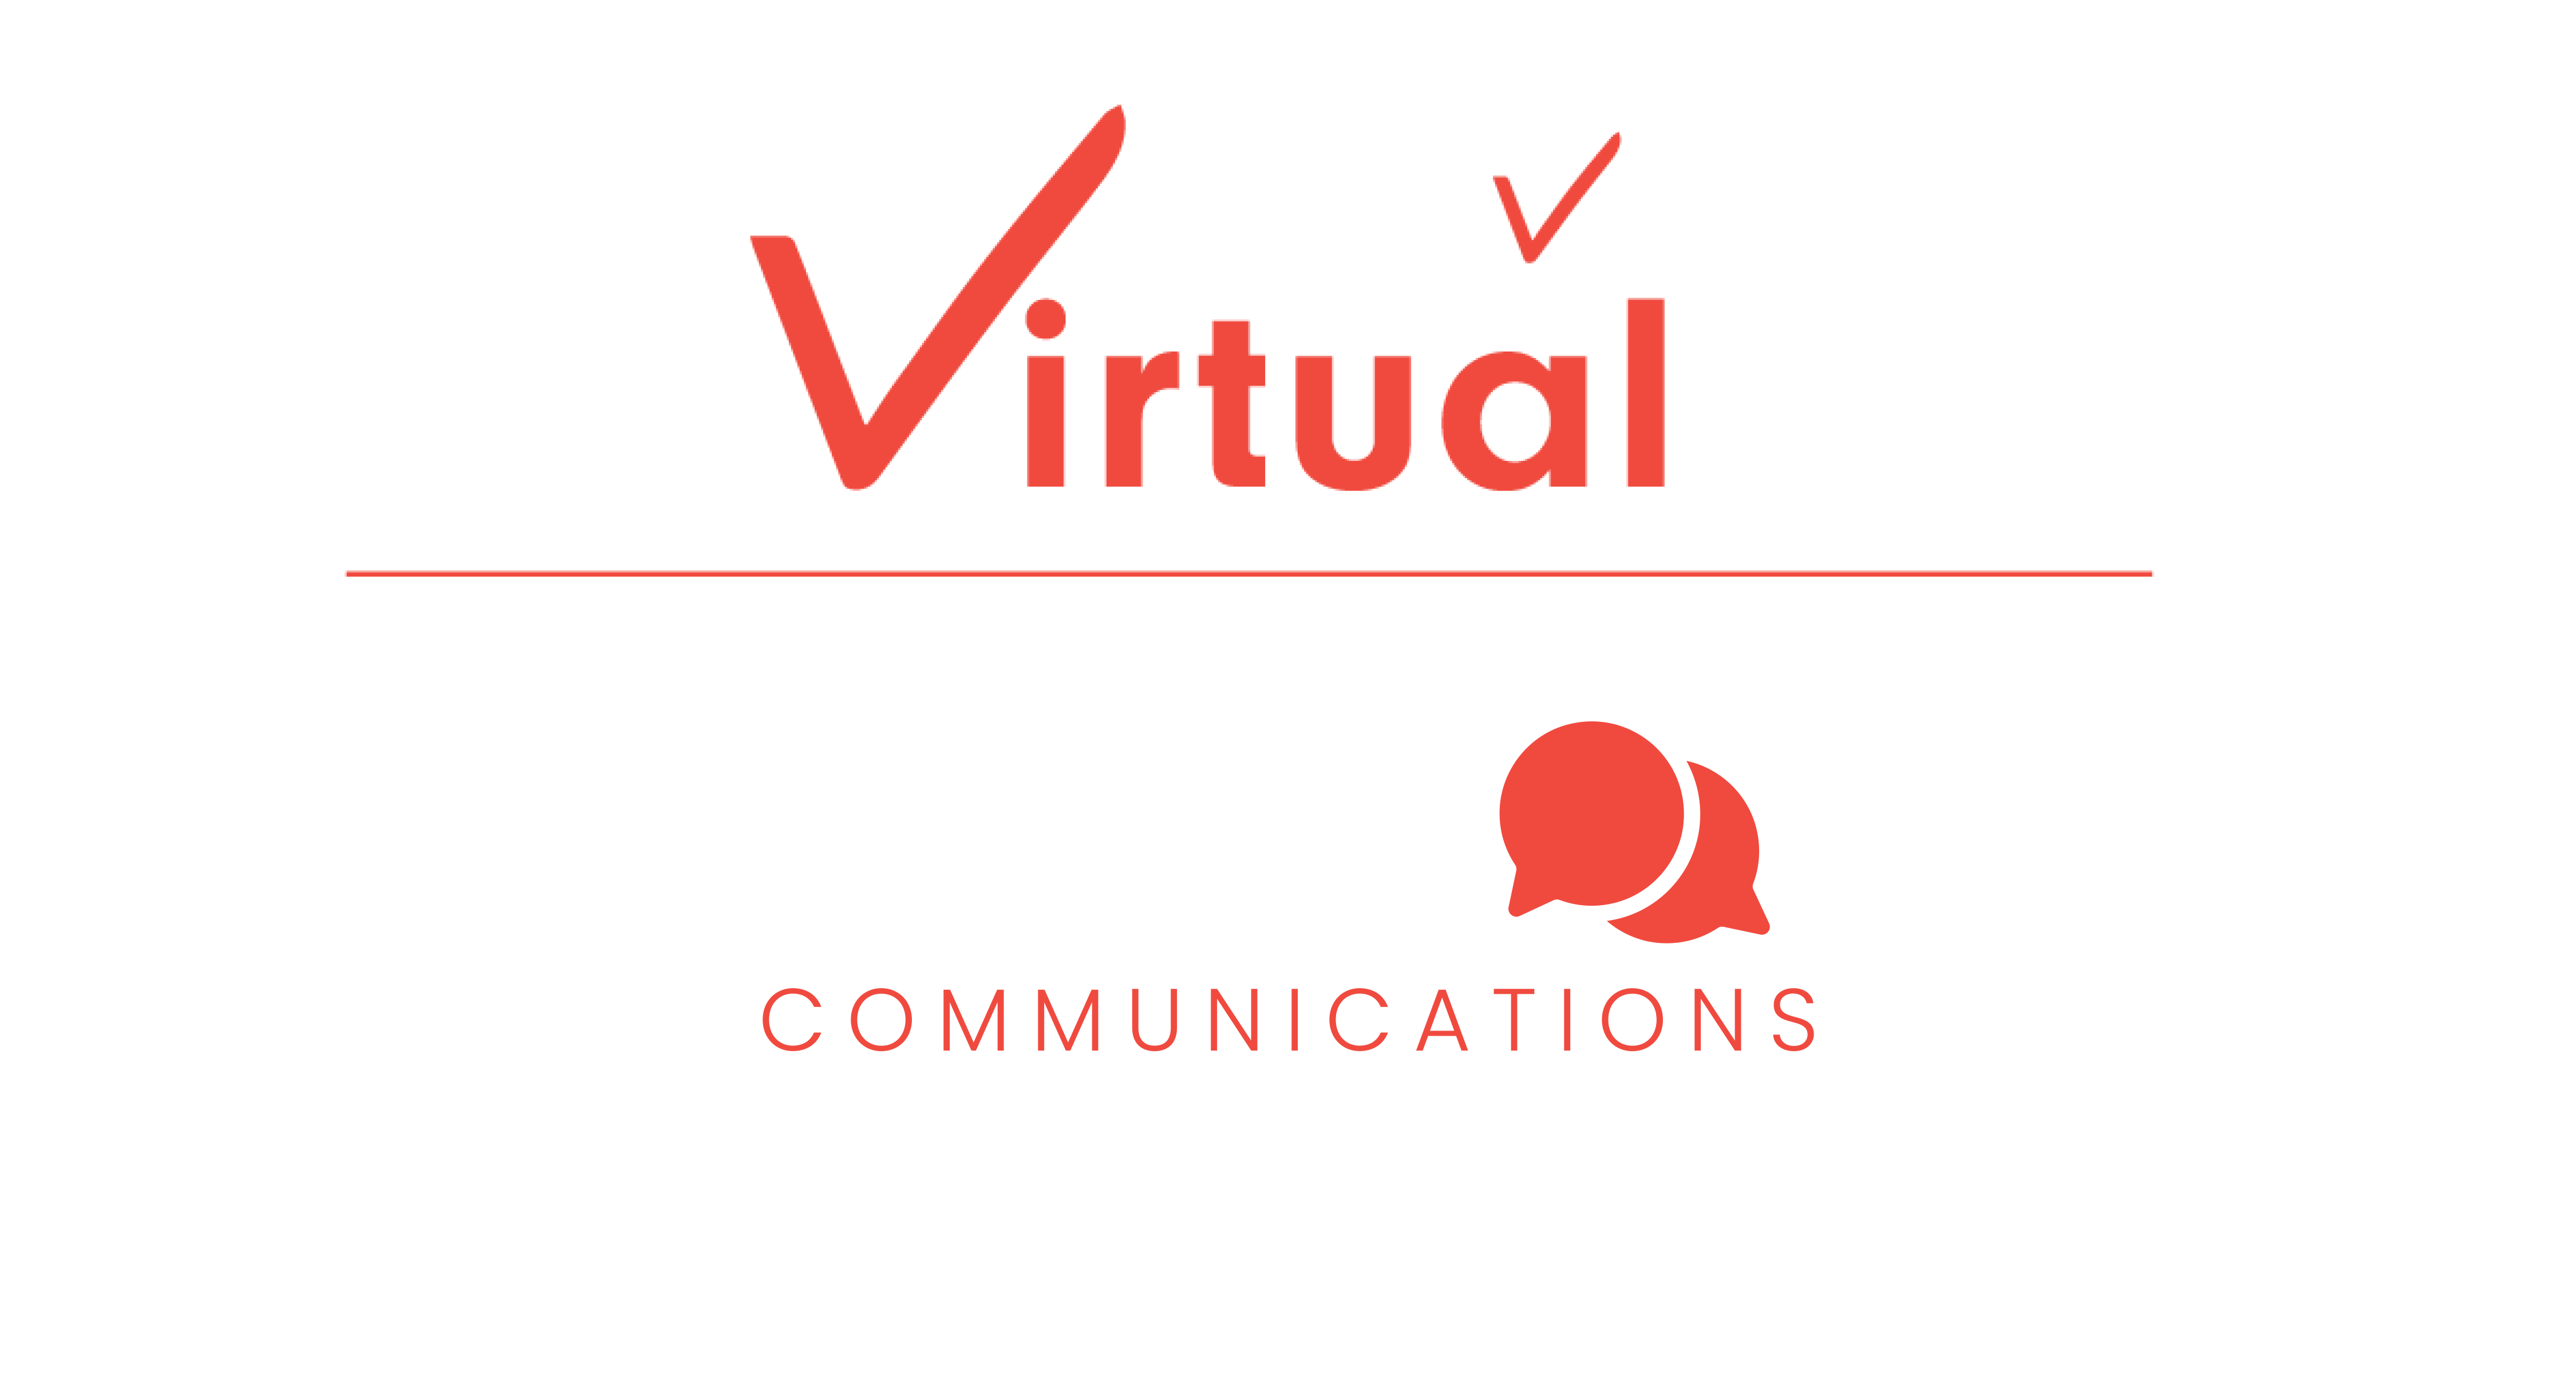 Talent branding + internal communications logo with internal removed